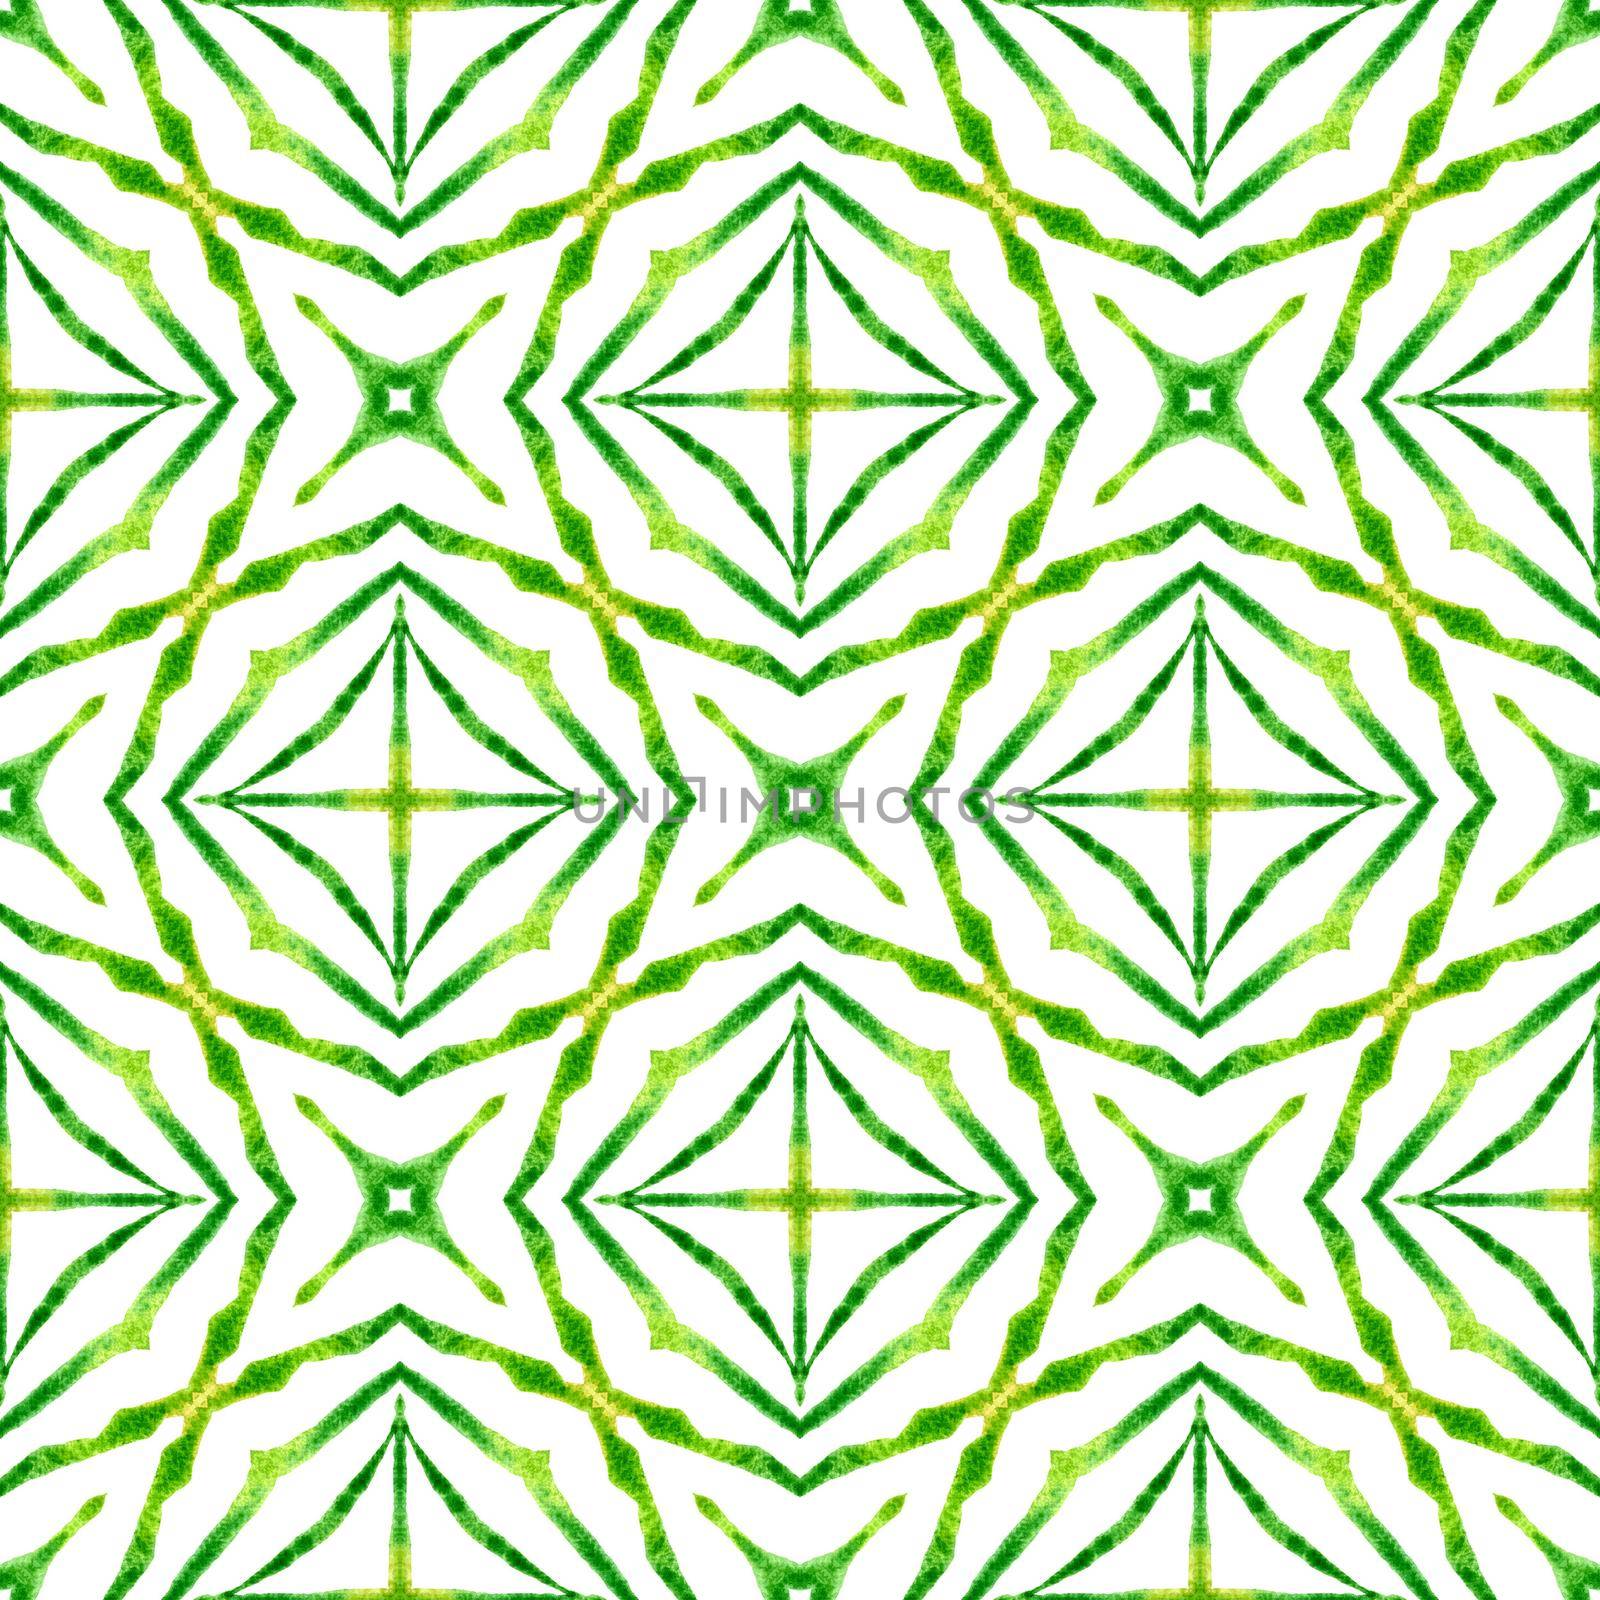 Green geometric chevron watercolor border. Green mesmeric boho chic summer design. Textile ready bizarre print, swimwear fabric, wallpaper, wrapping. Chevron watercolor pattern.